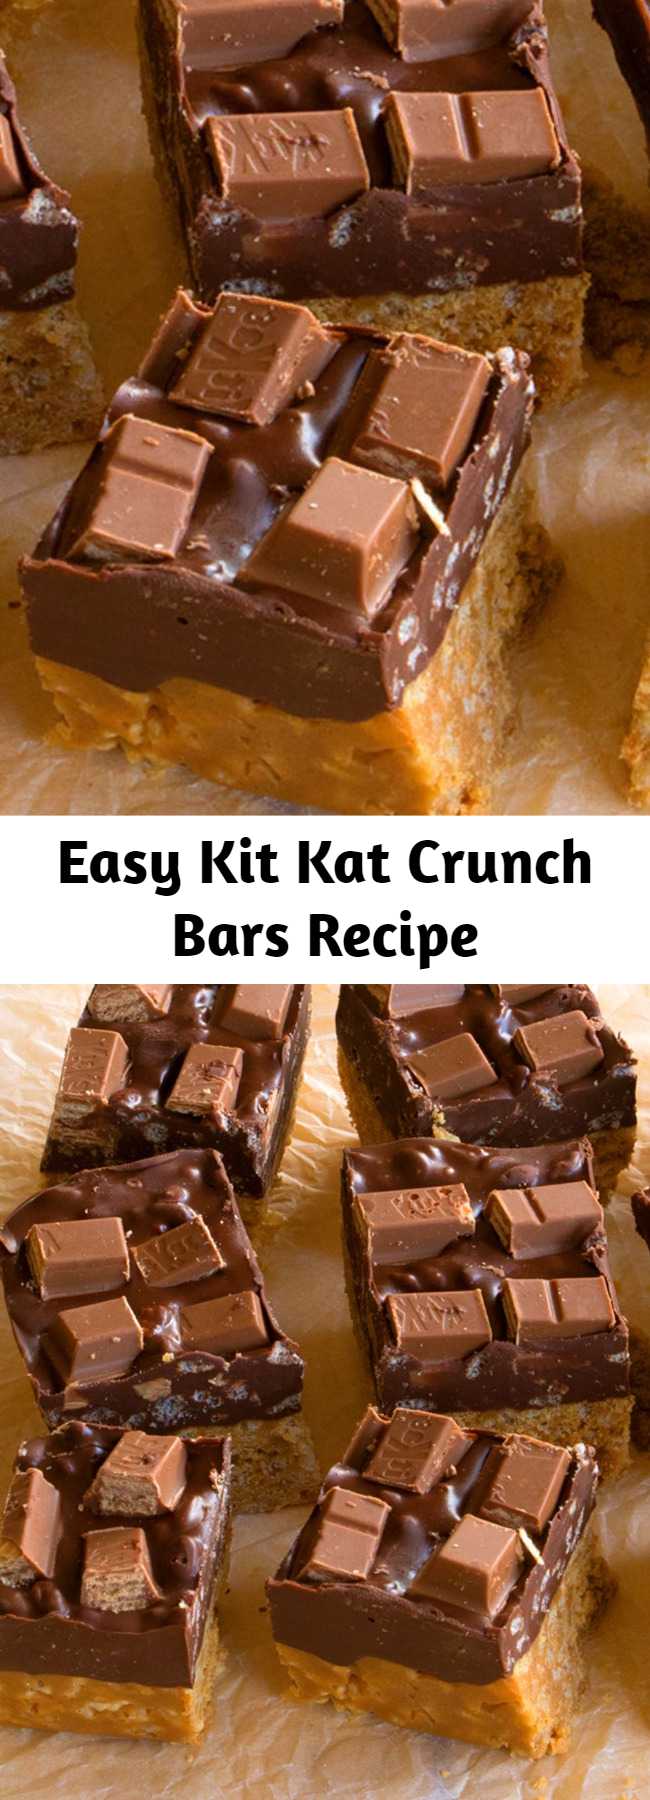 Easy Kit Kat Crunch Bars Recipe - Kit Kat lovers, we're lookin' at you!